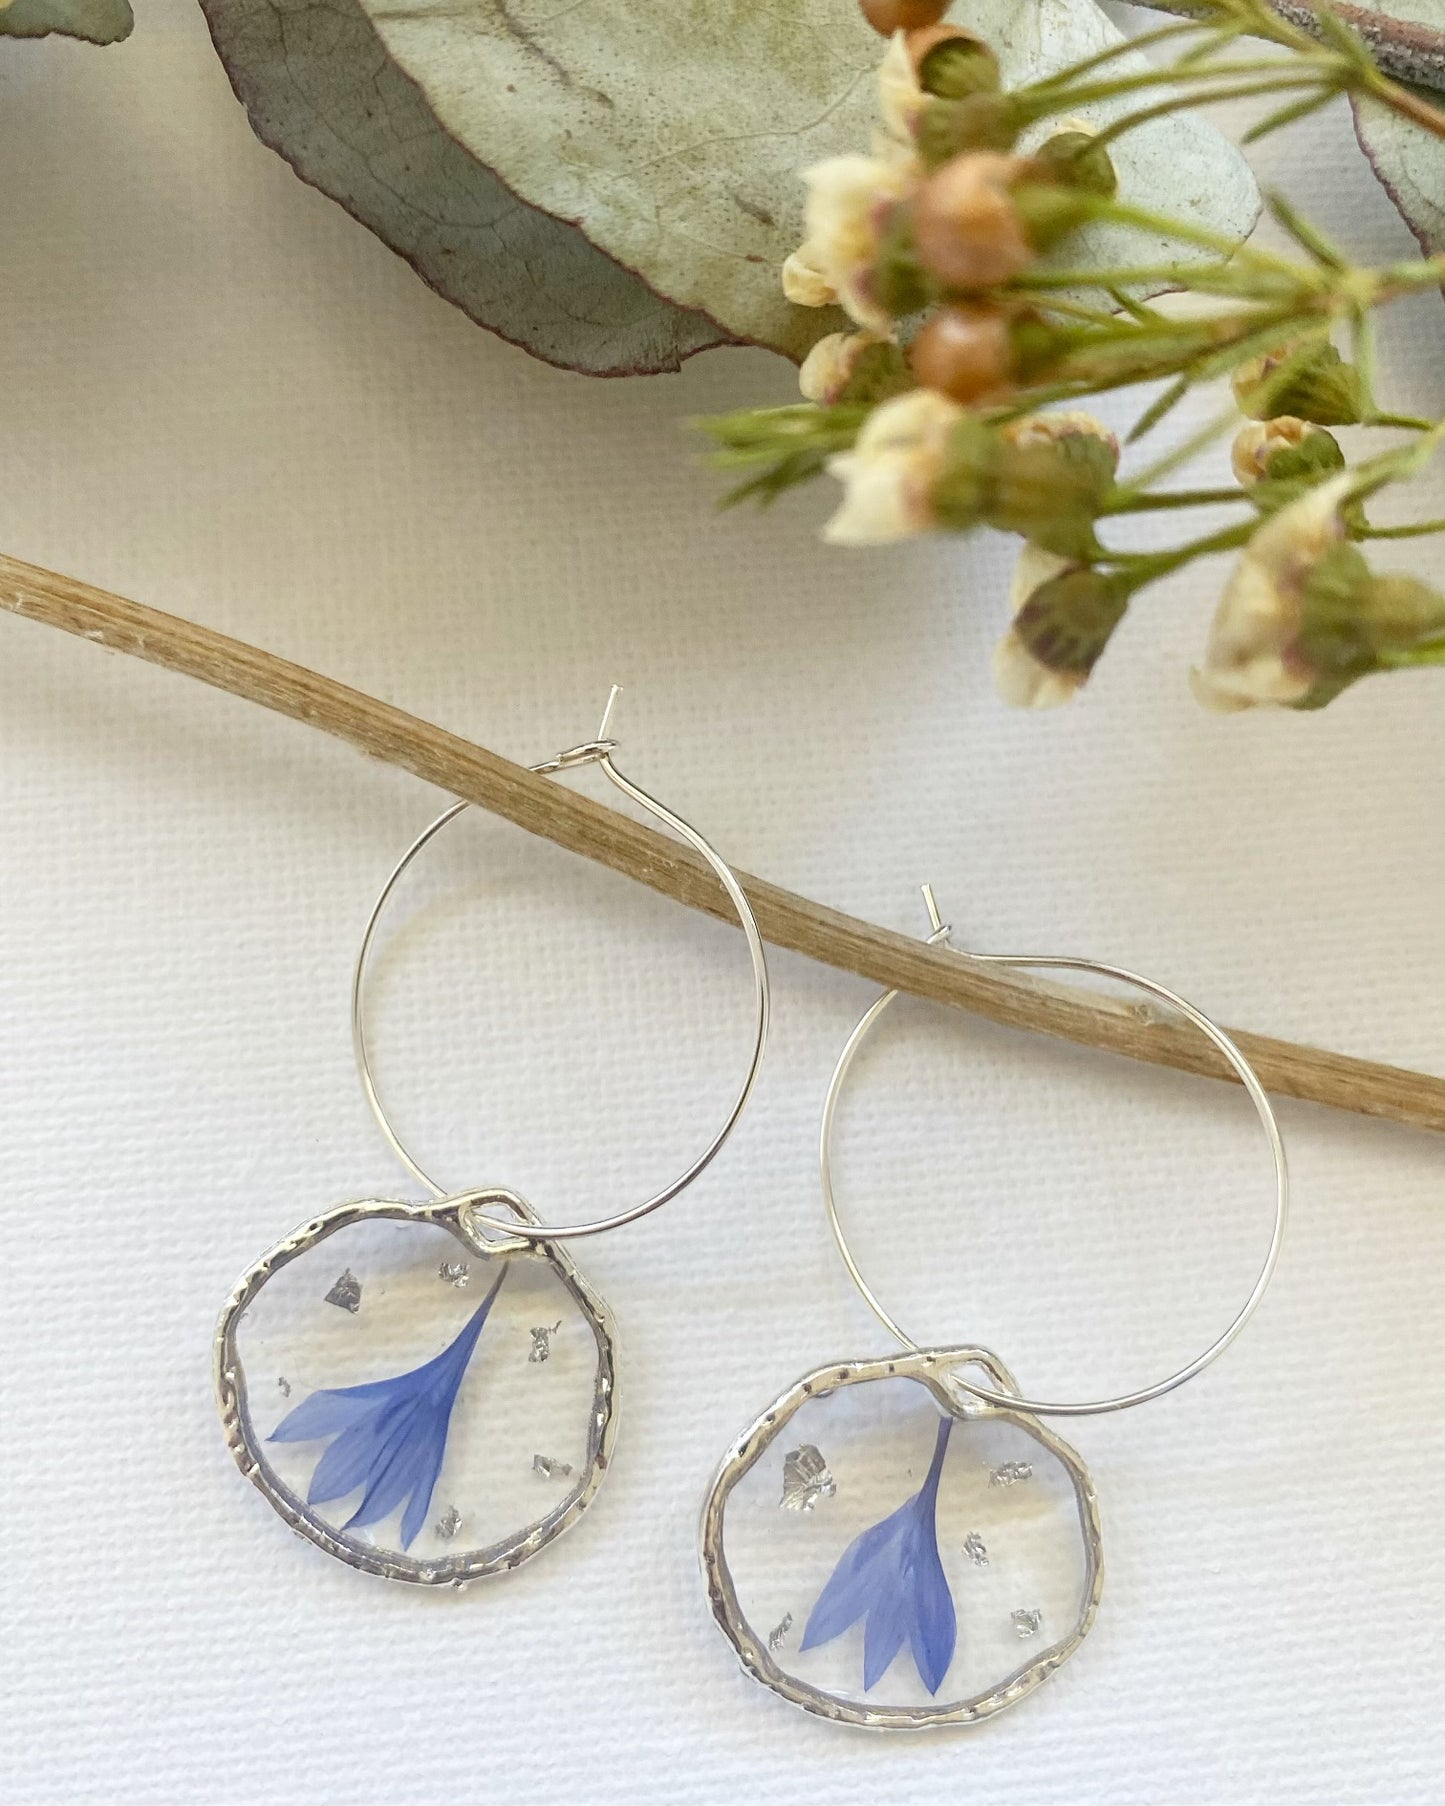 Pressed Blue Cornflower Earrings with Silver Leaf